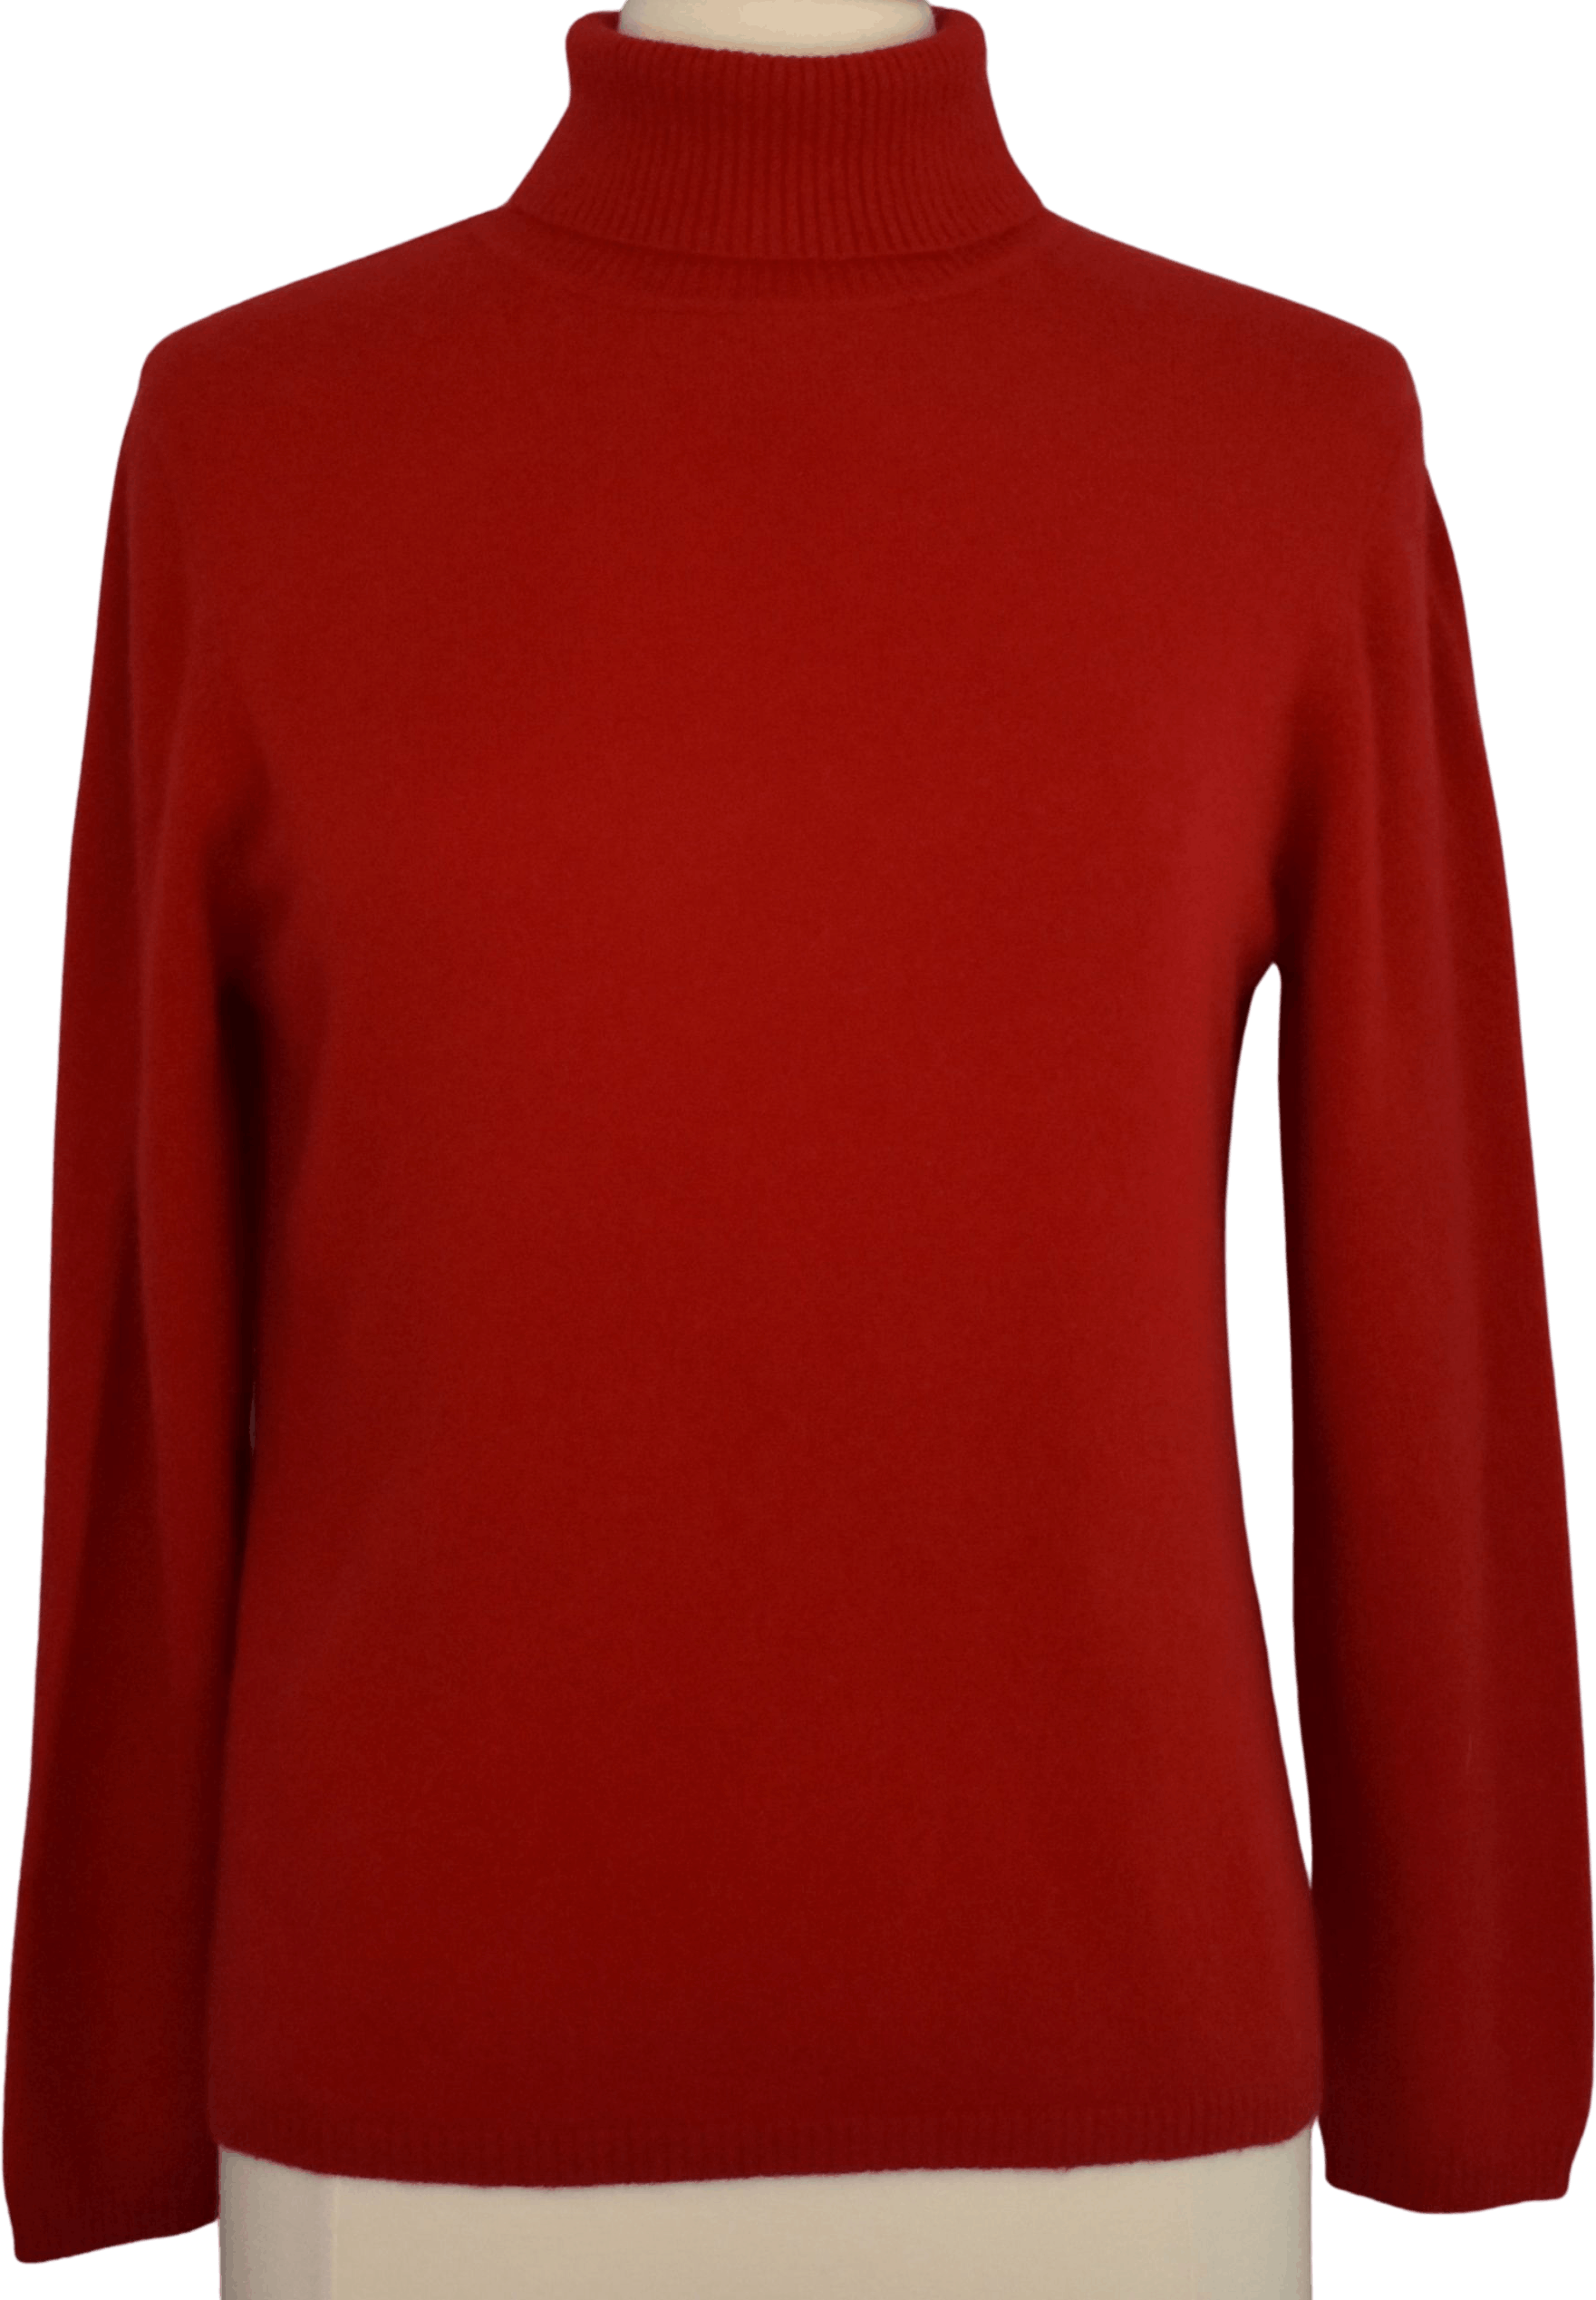 Vintage 90's Red Cashmere Turtleneck Sweater by Esperatno | Shop THRILLING